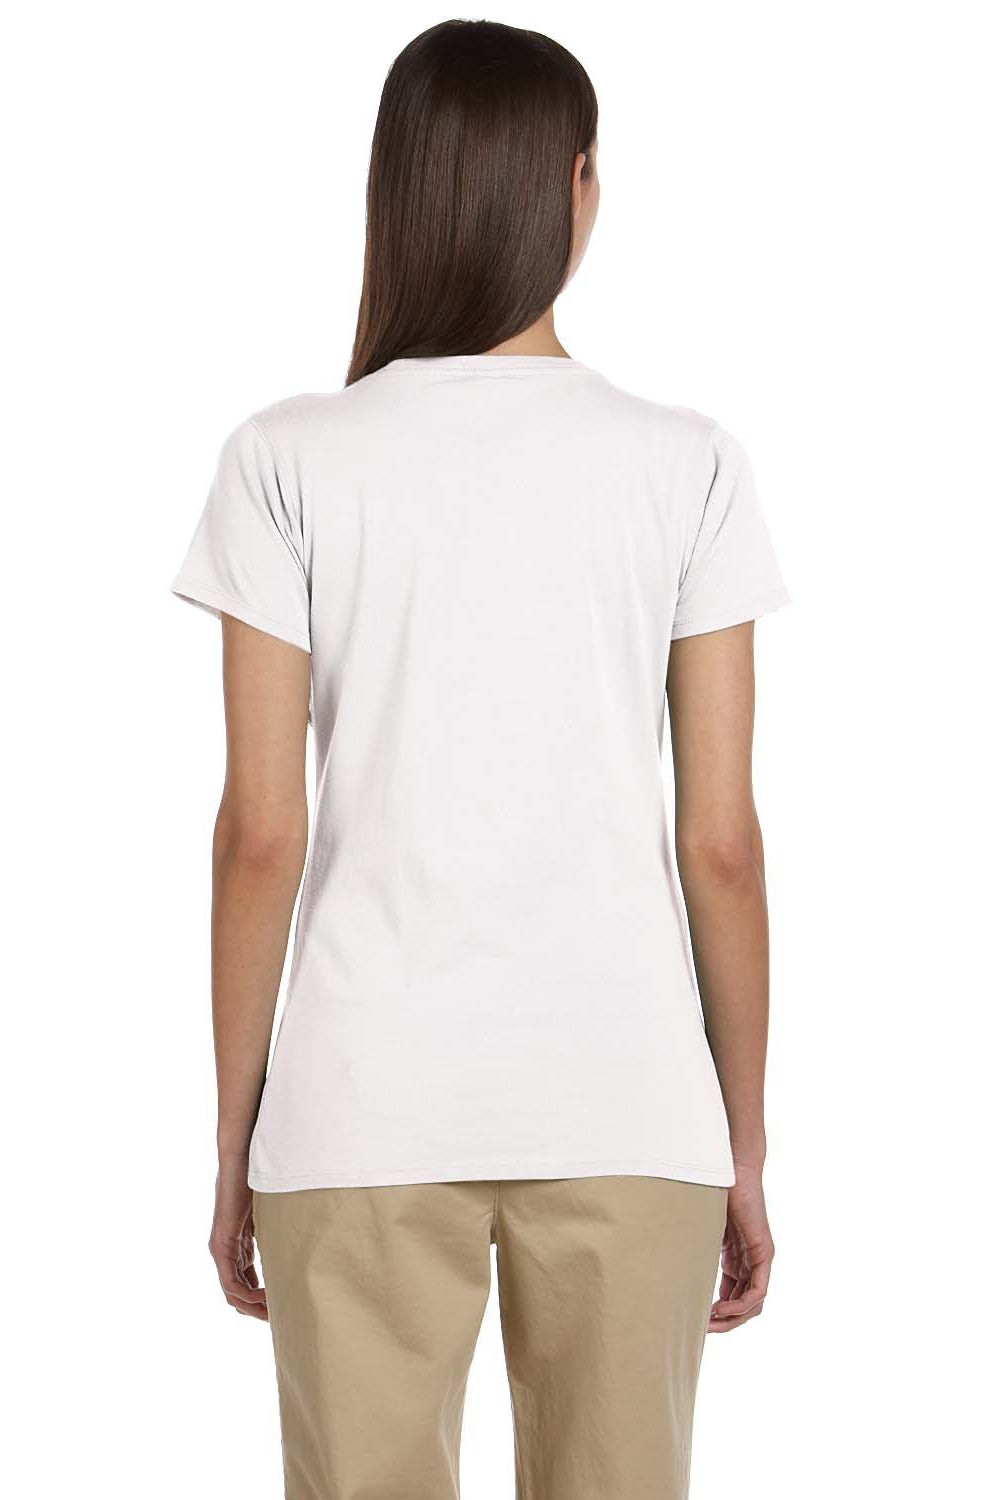 Econscious EC3052 Womens Short Sleeve V-Neck T-Shirt White Back